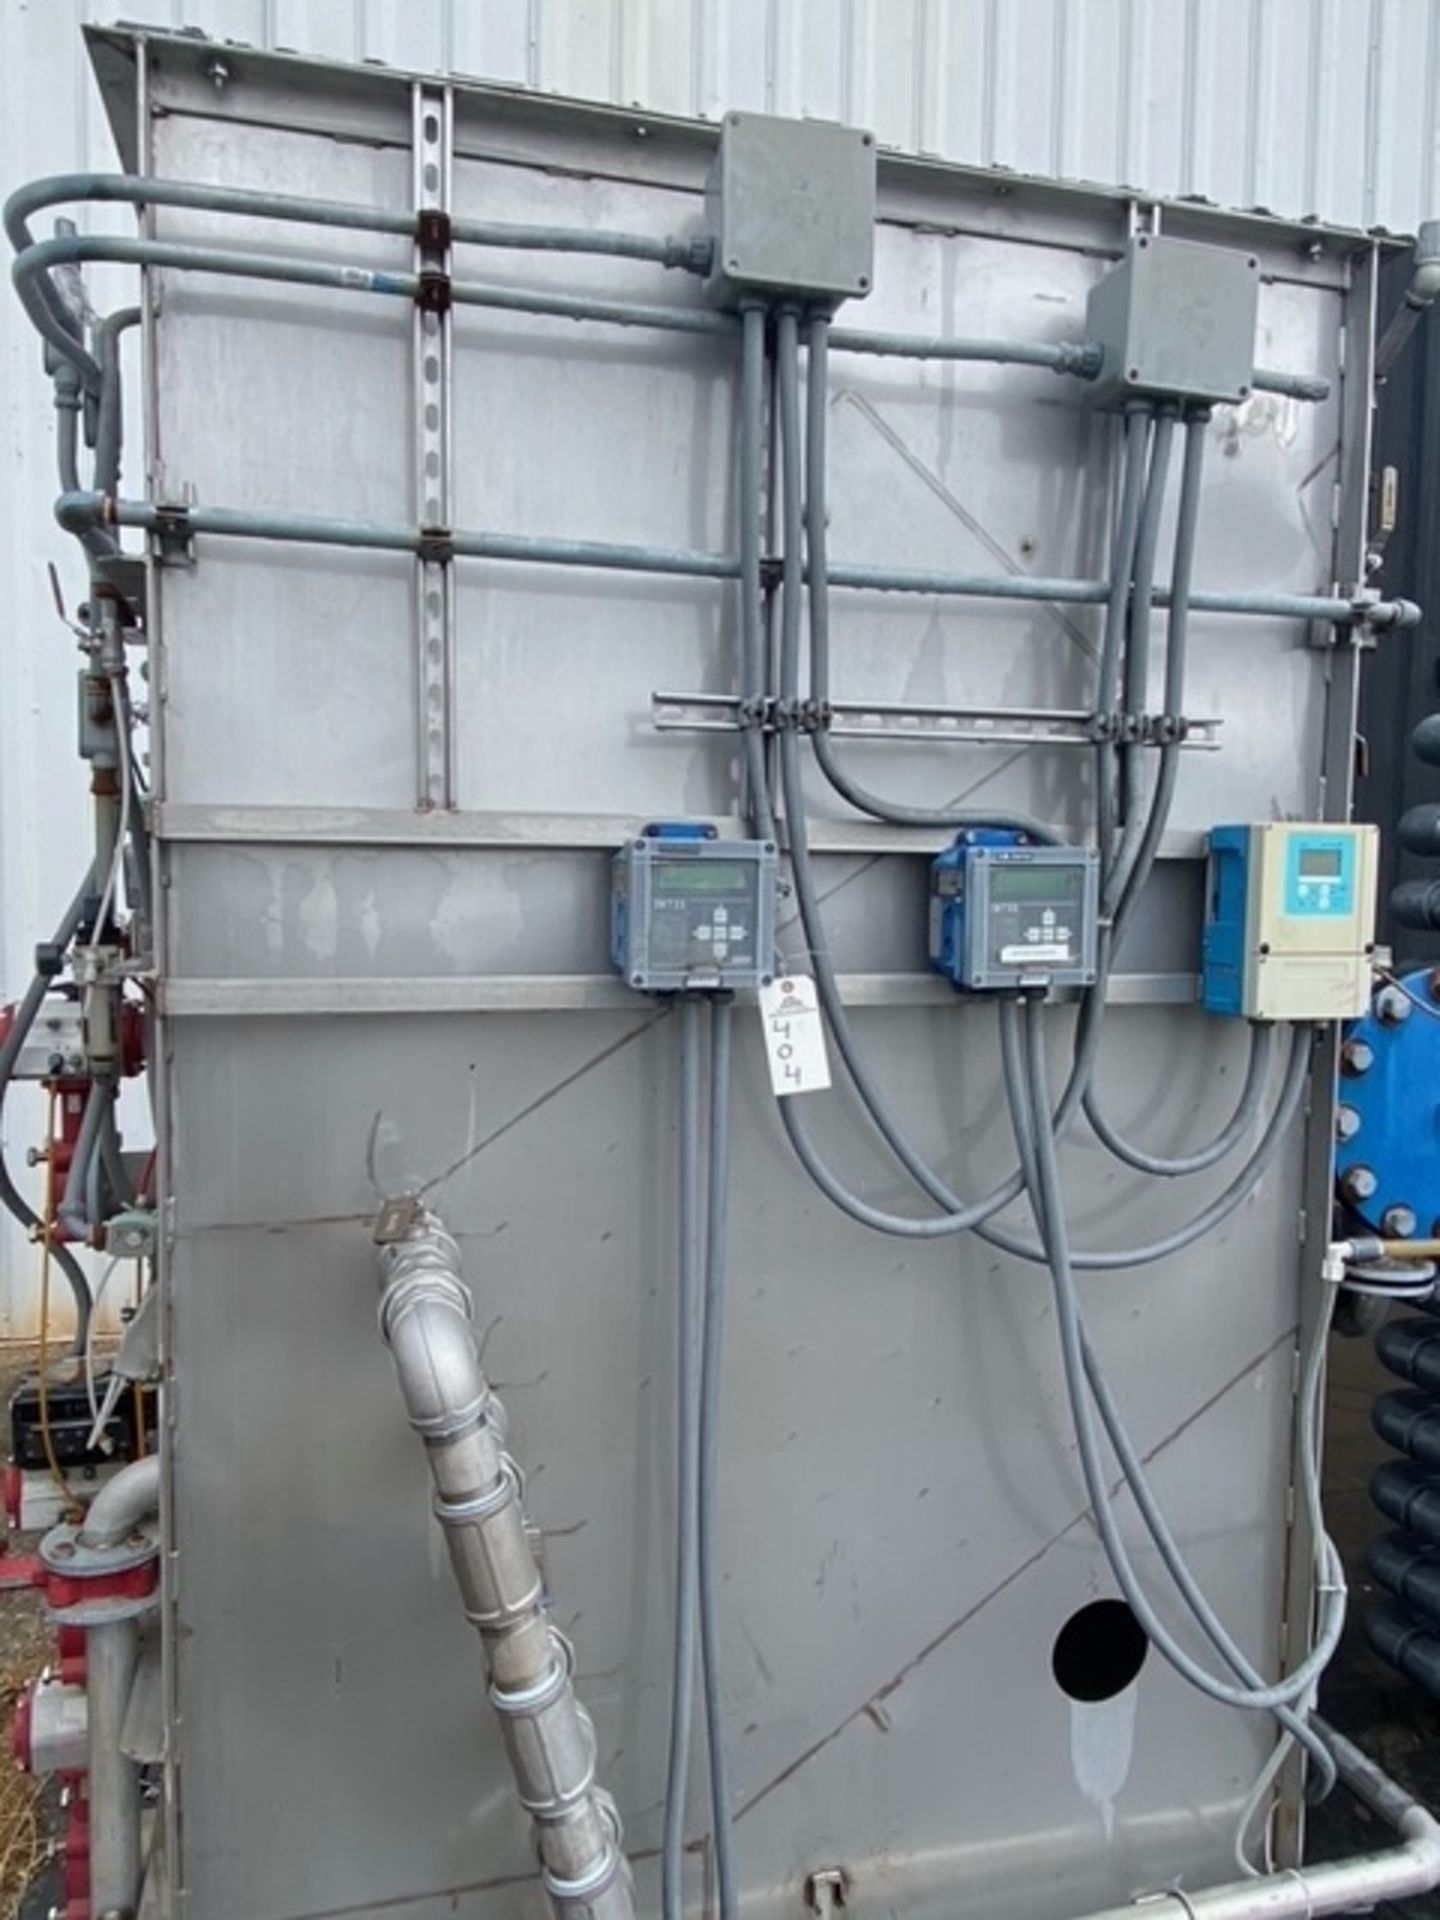 Krofta Waste Treatment System, Model MFV-80, Krofta # 12-K05, Serial # 91362, MFG 2012 with DAF 40 - Image 4 of 4